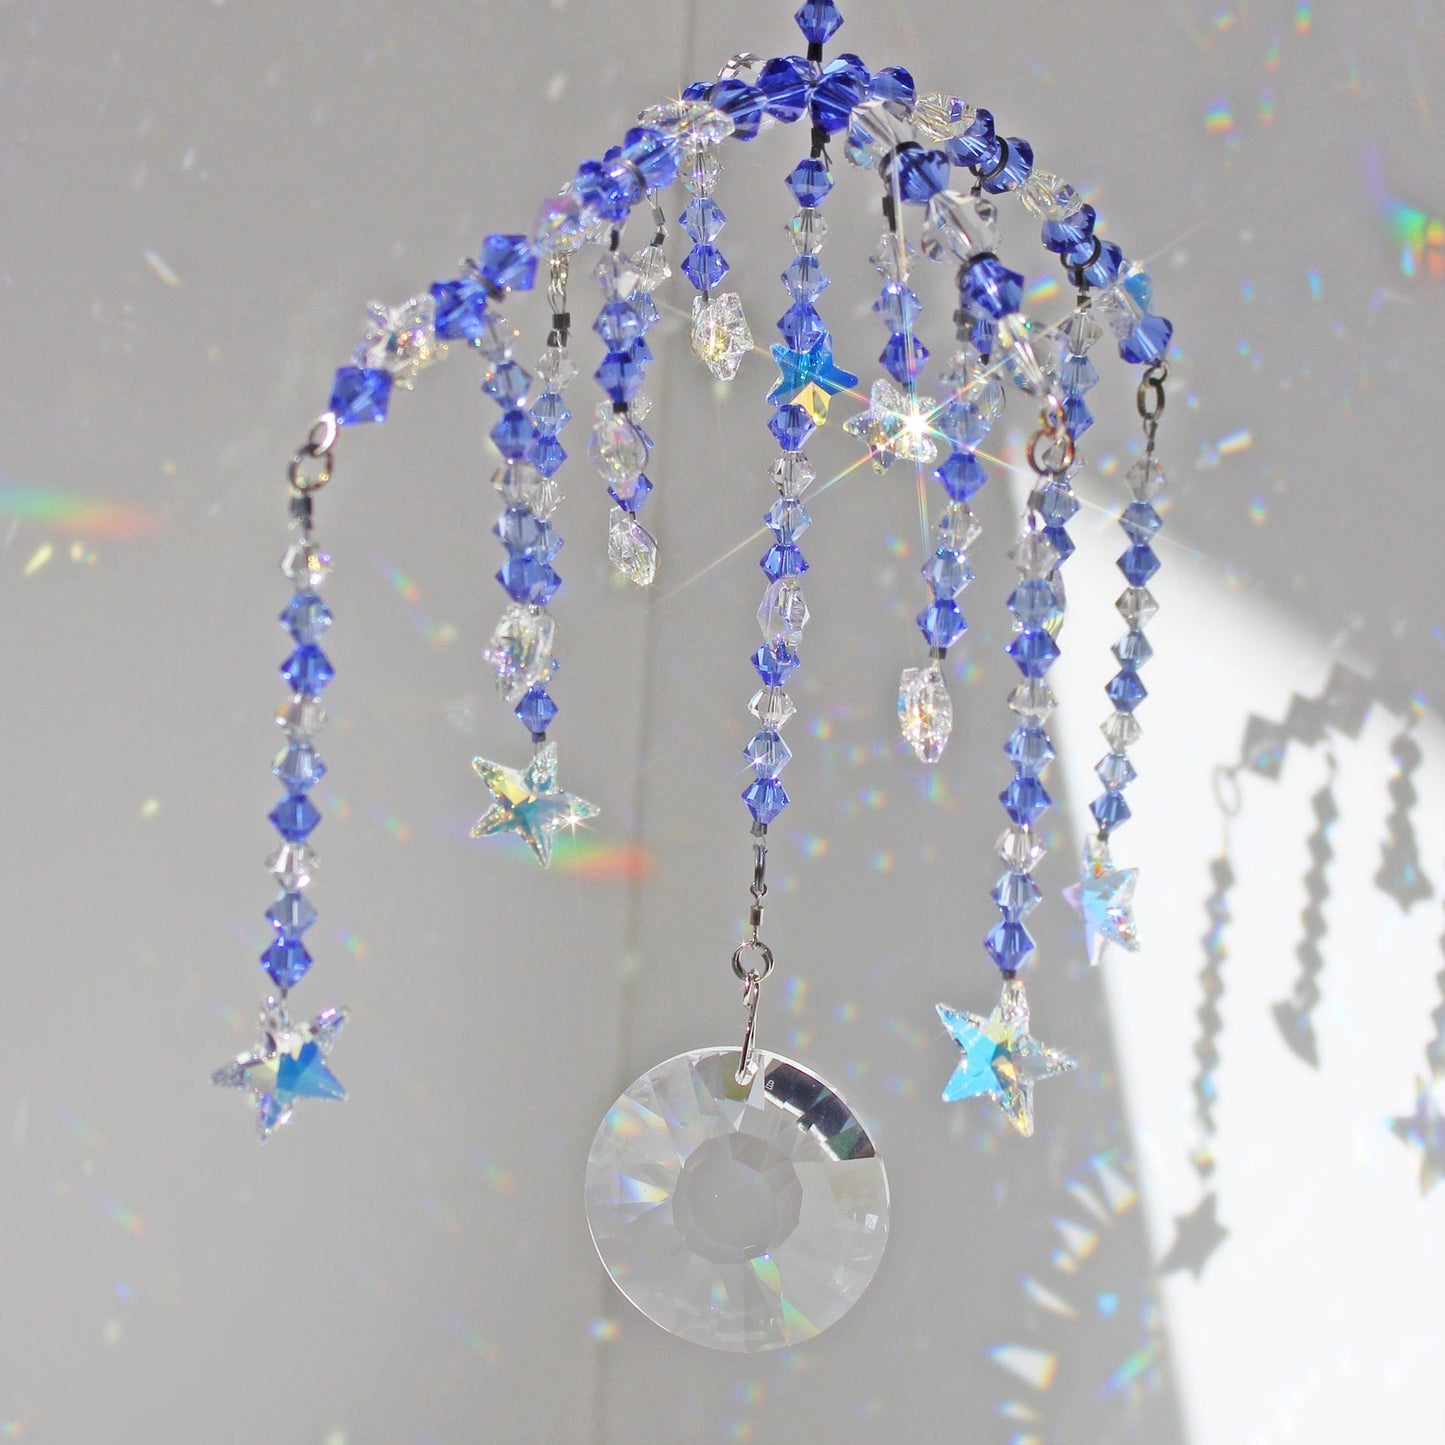 Moon Prism, Crystal Pendulum Ornament Suncatcher, Sunlight Catcher, Rainbow Maker Crystal Art Full Celestial Beauty